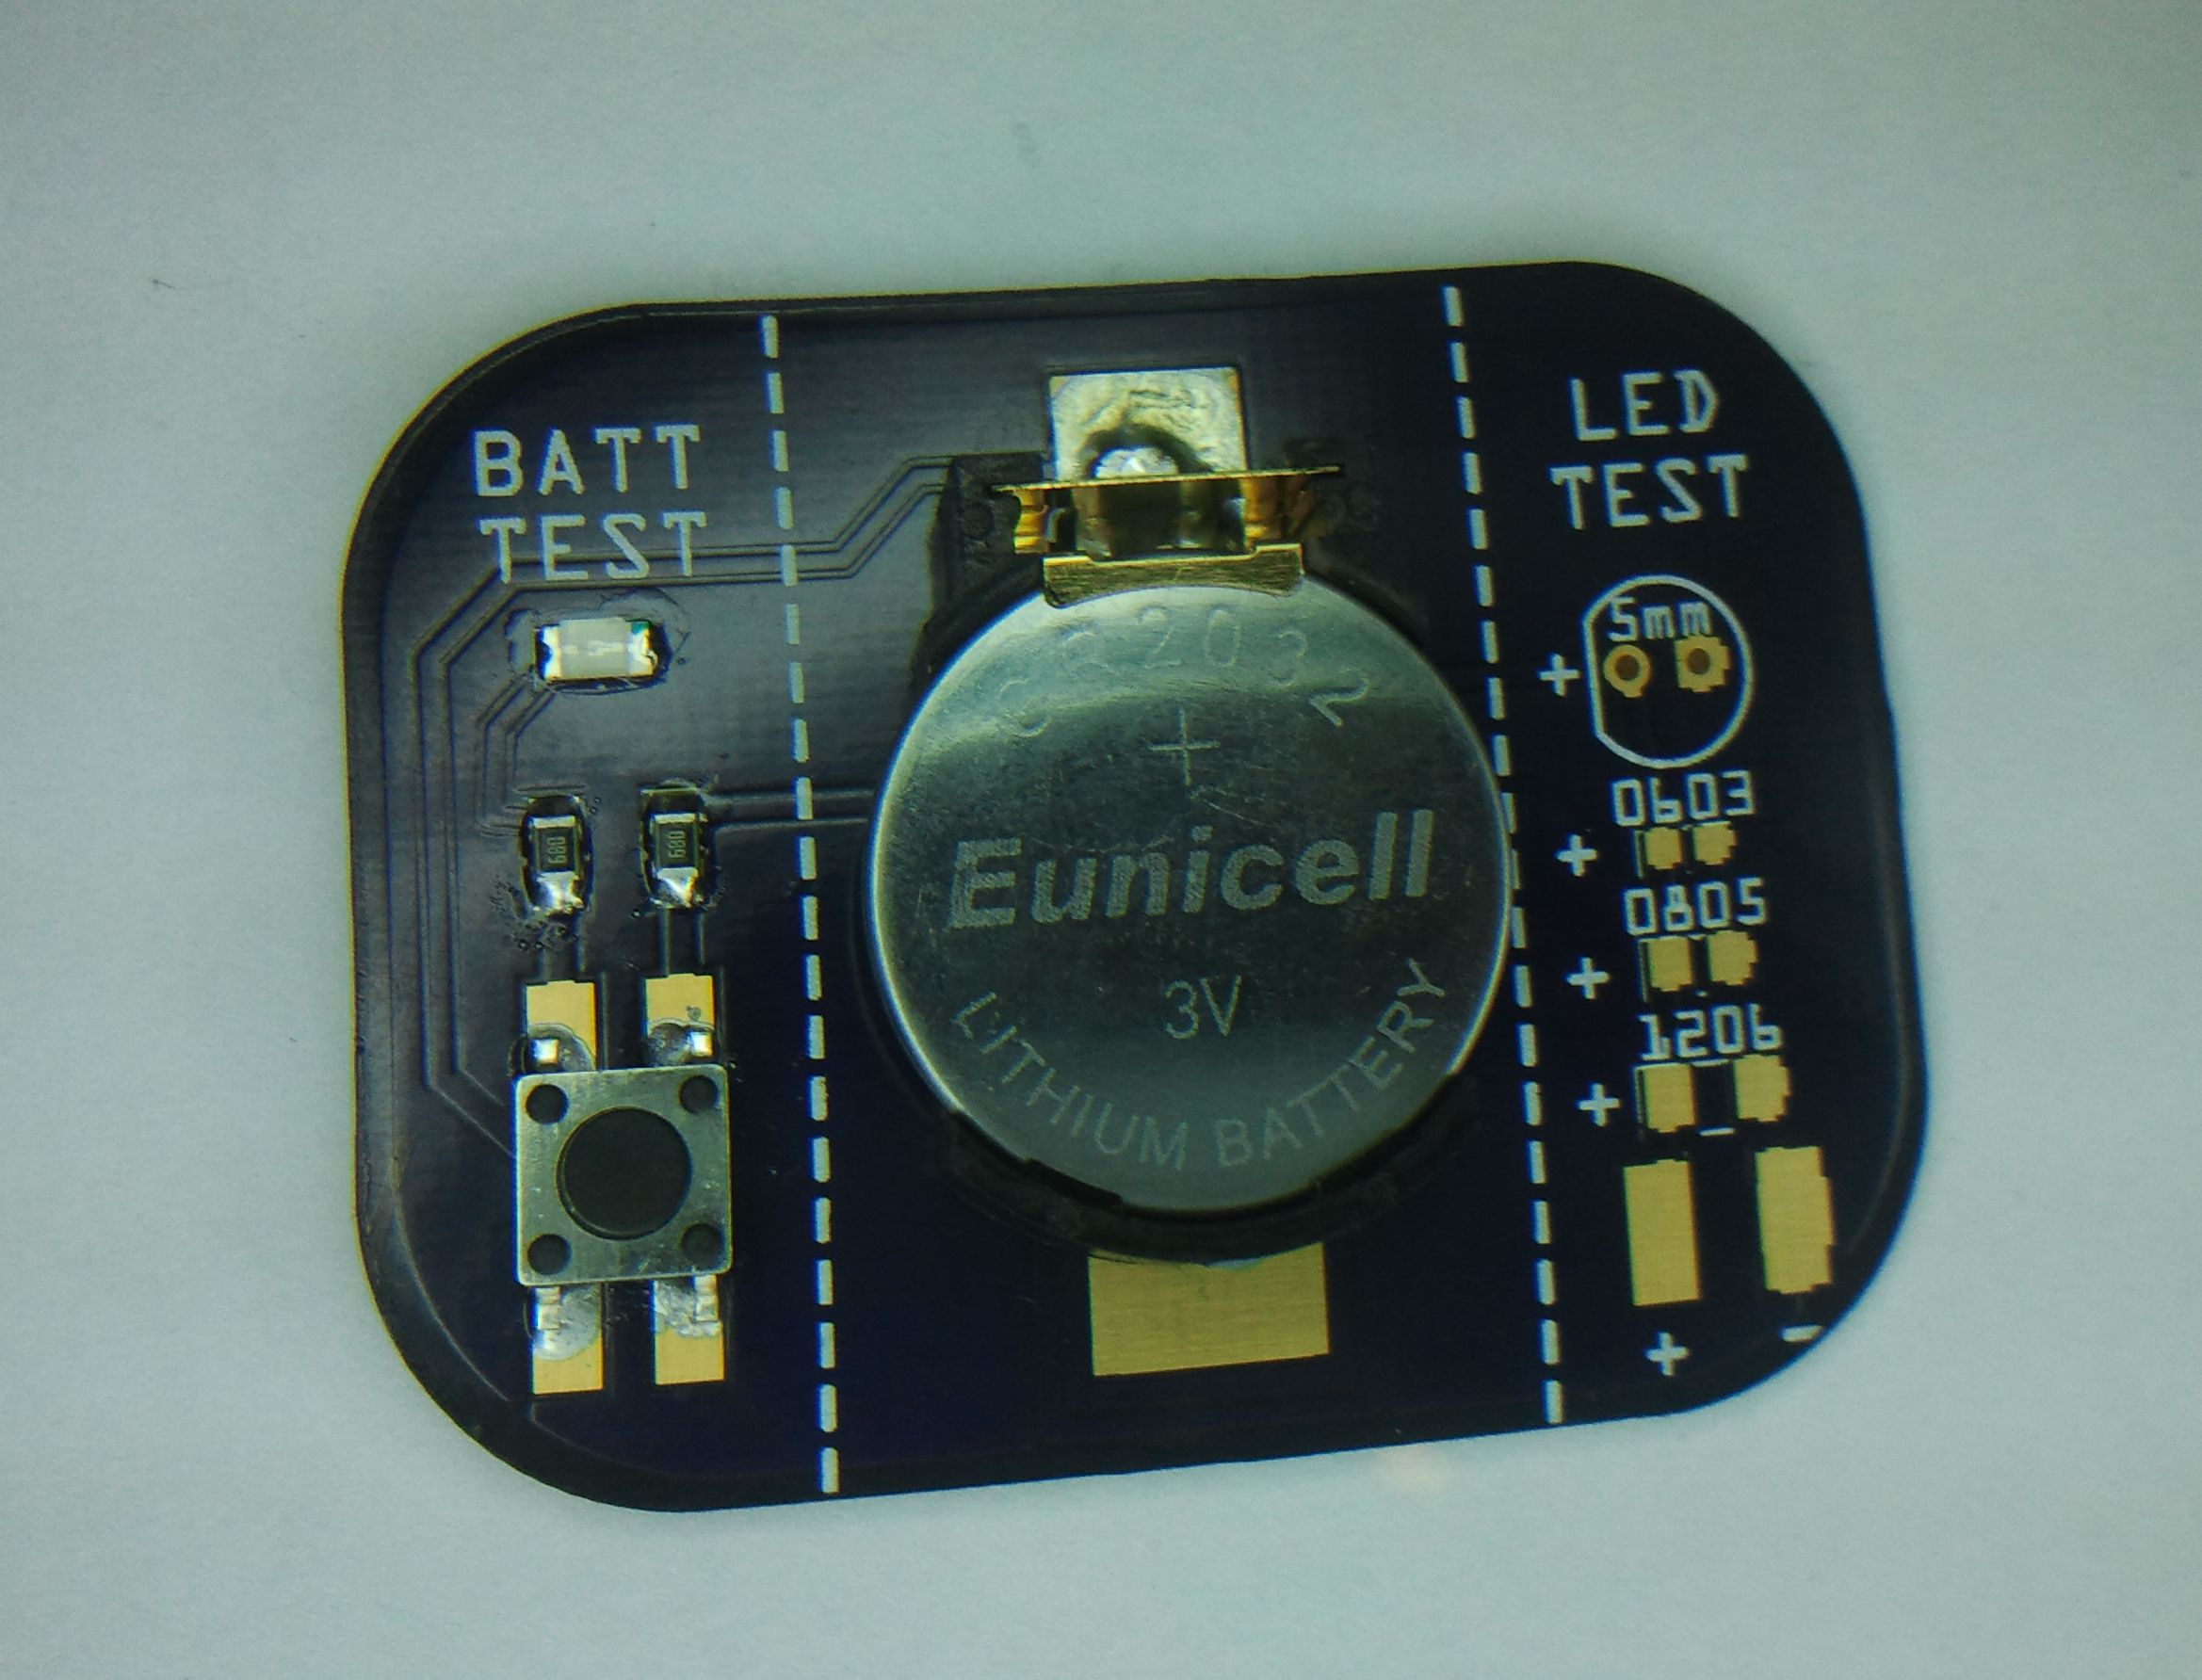 Simple SMD LED tester Electronics-Lab.com